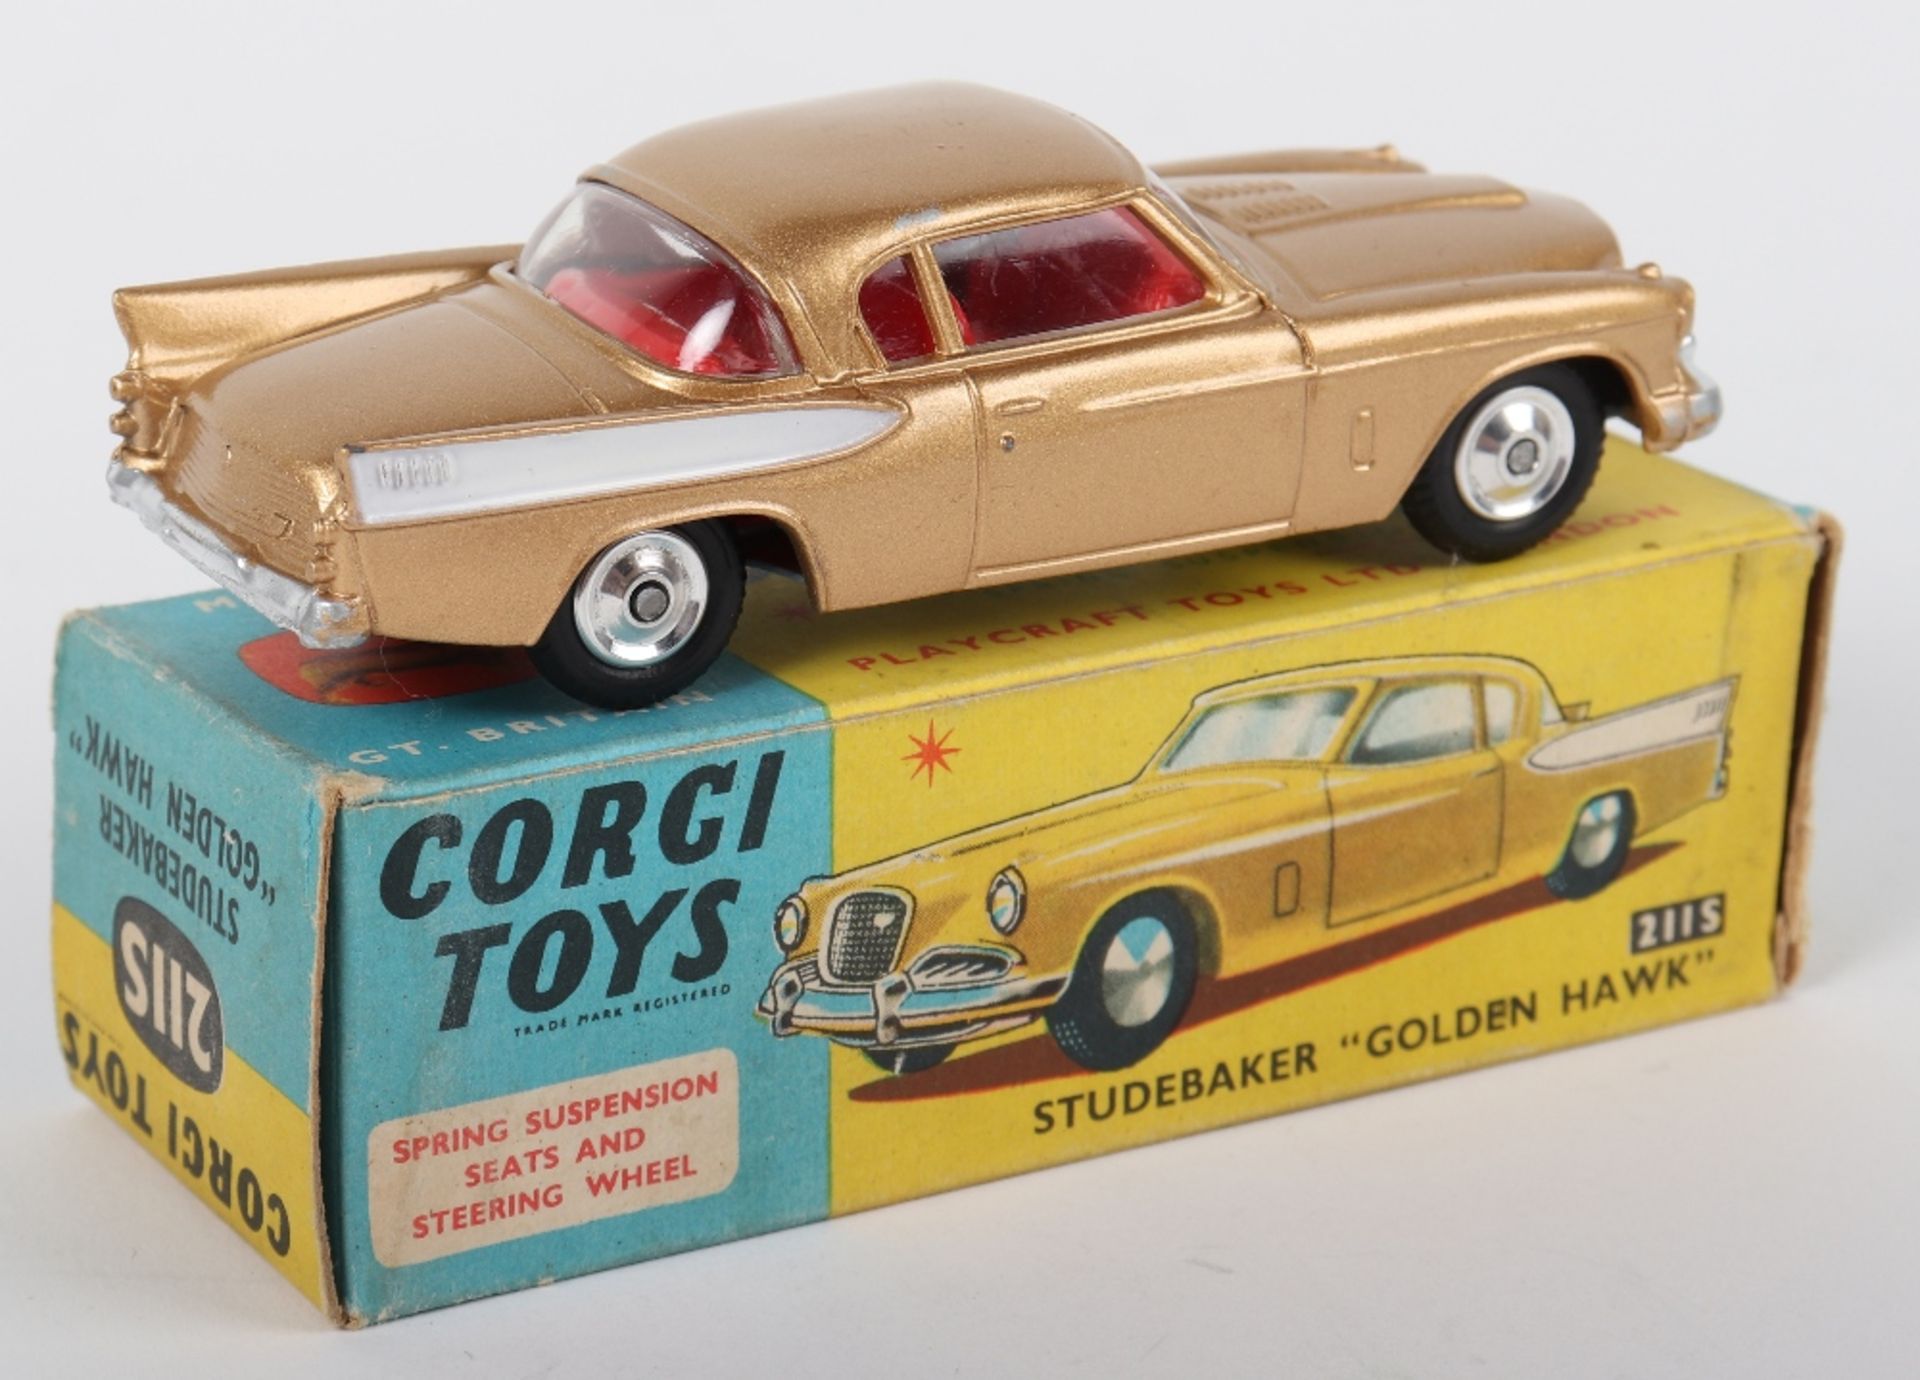 Corgi Toys 211S Studebaker “Golden Hawk” - Bild 2 aus 2